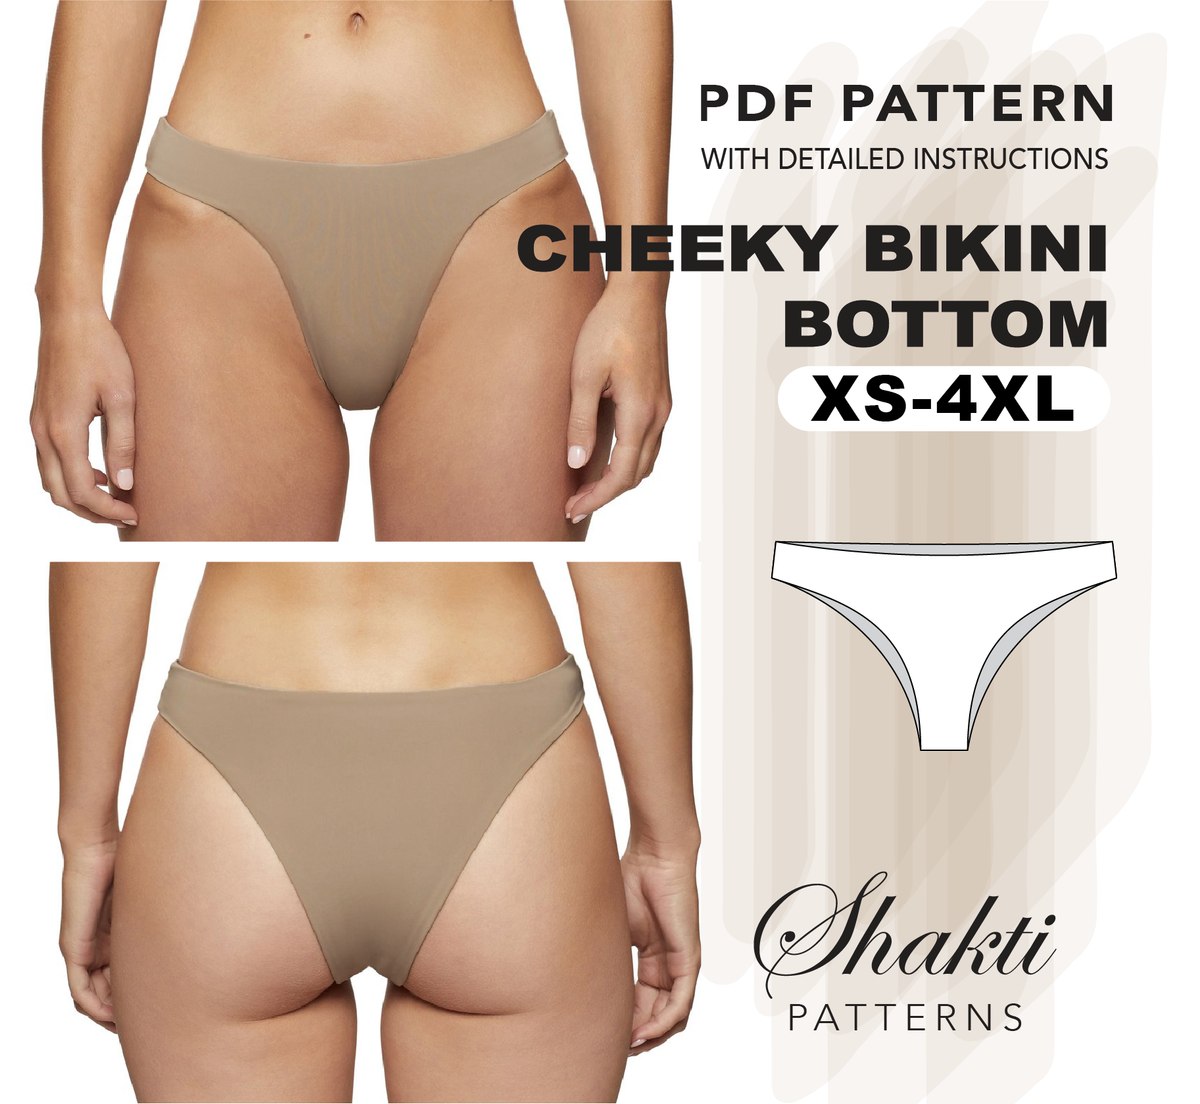 Bikini Briefs V-Cut Sewing Pattern